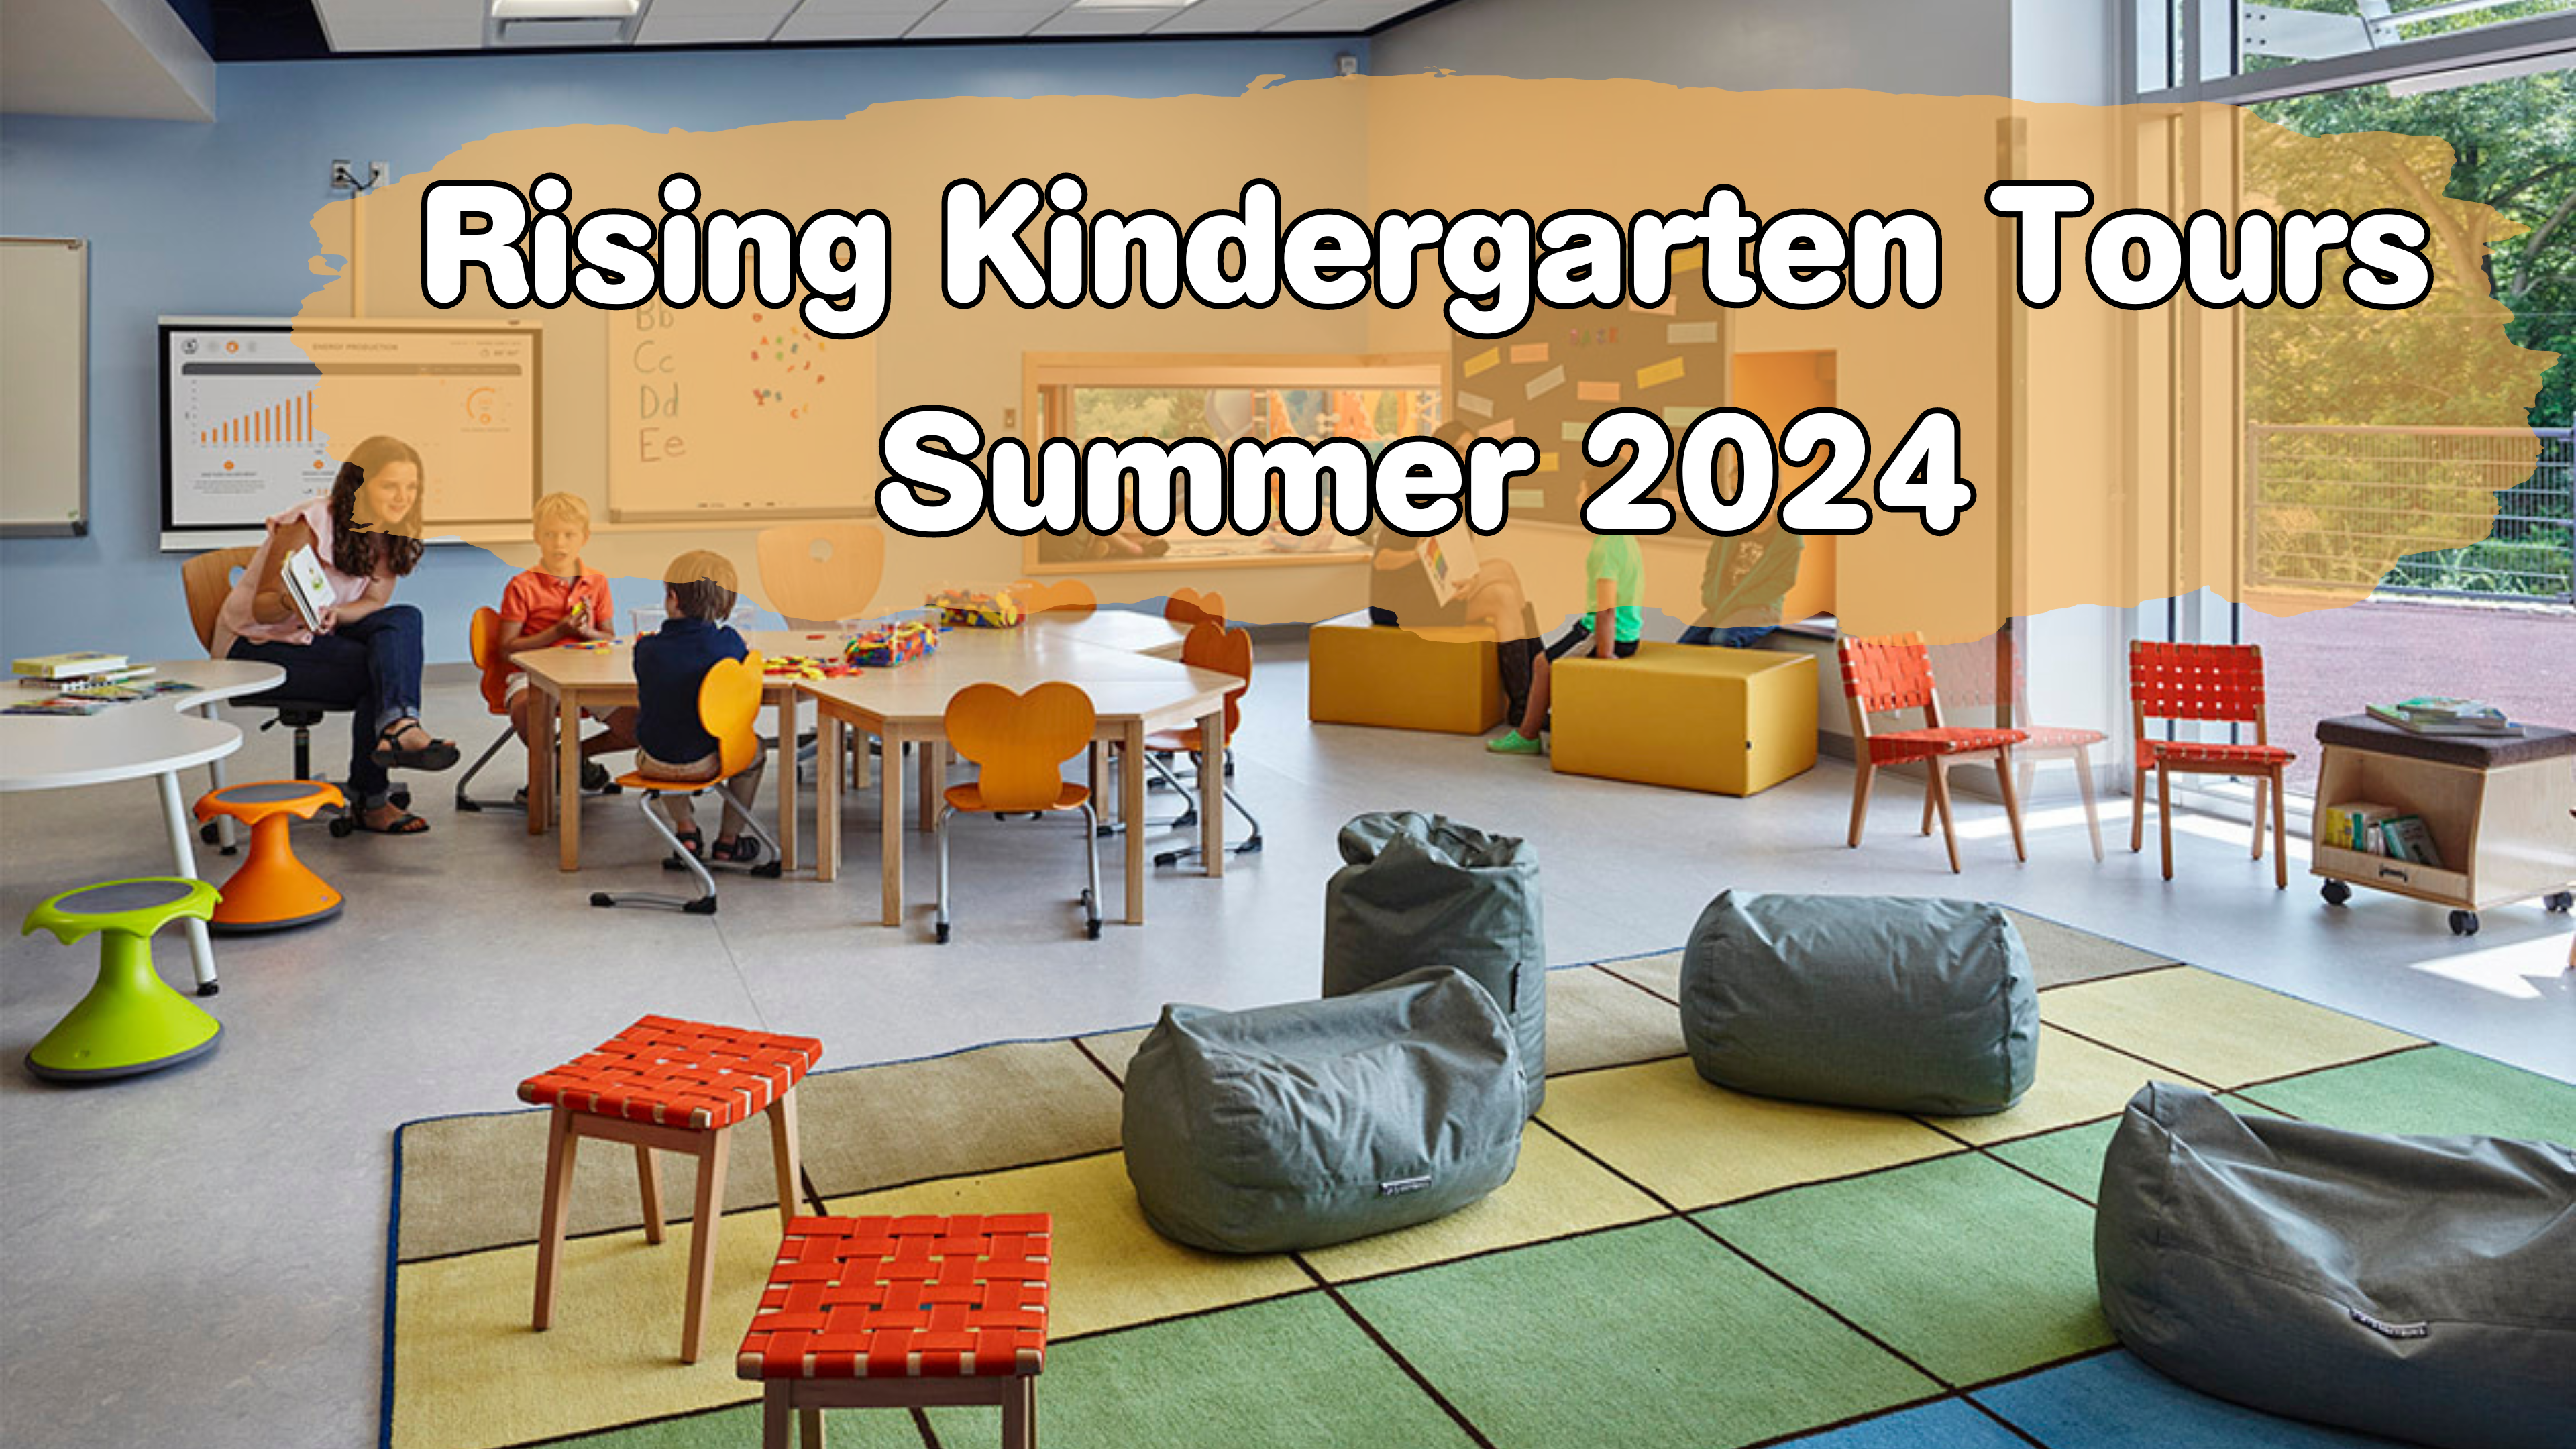 Photo of a kindergarten classroom with text "Rising Kindergarten Tours Summer 2024"